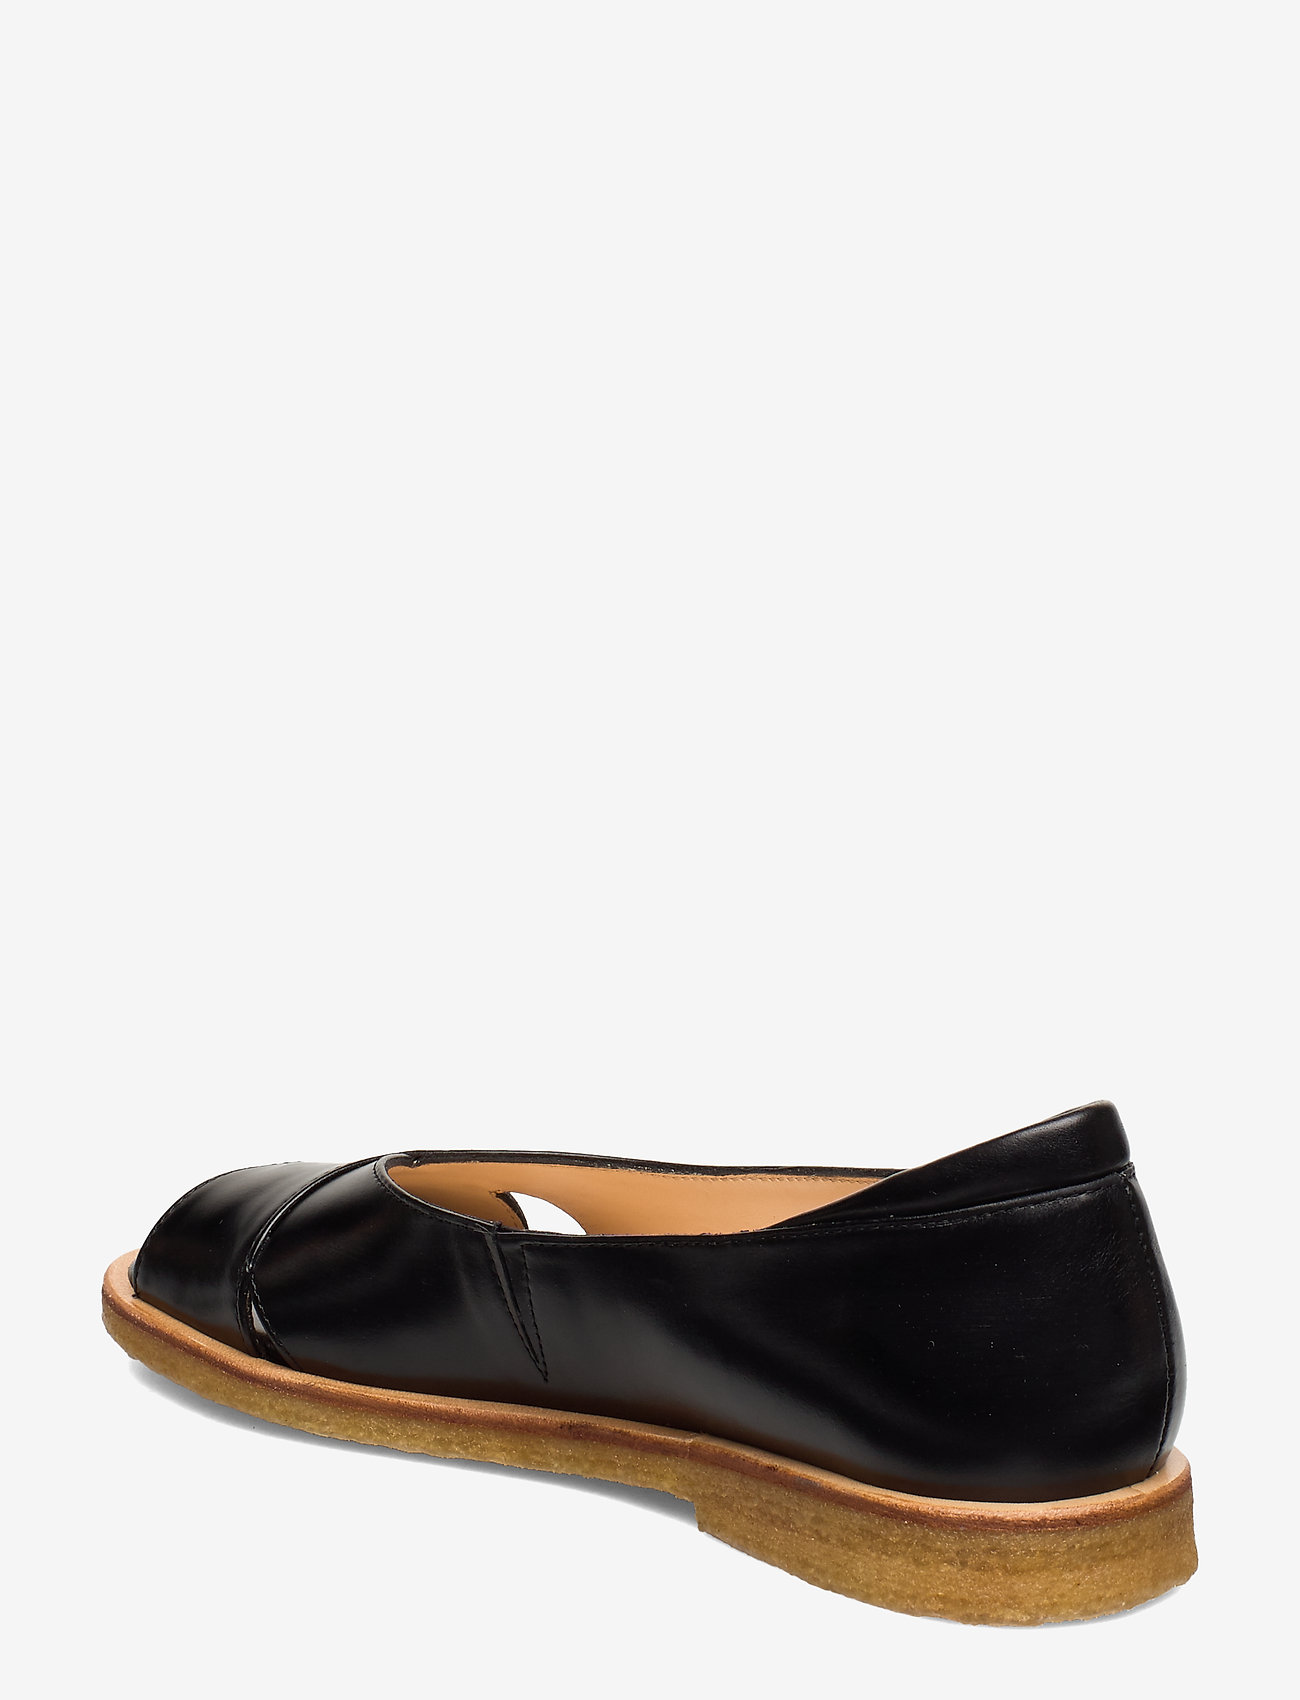 ANGULUS - Sandals - flat - open toe - clo - flache sandalen - 1835/001 black/black - 1